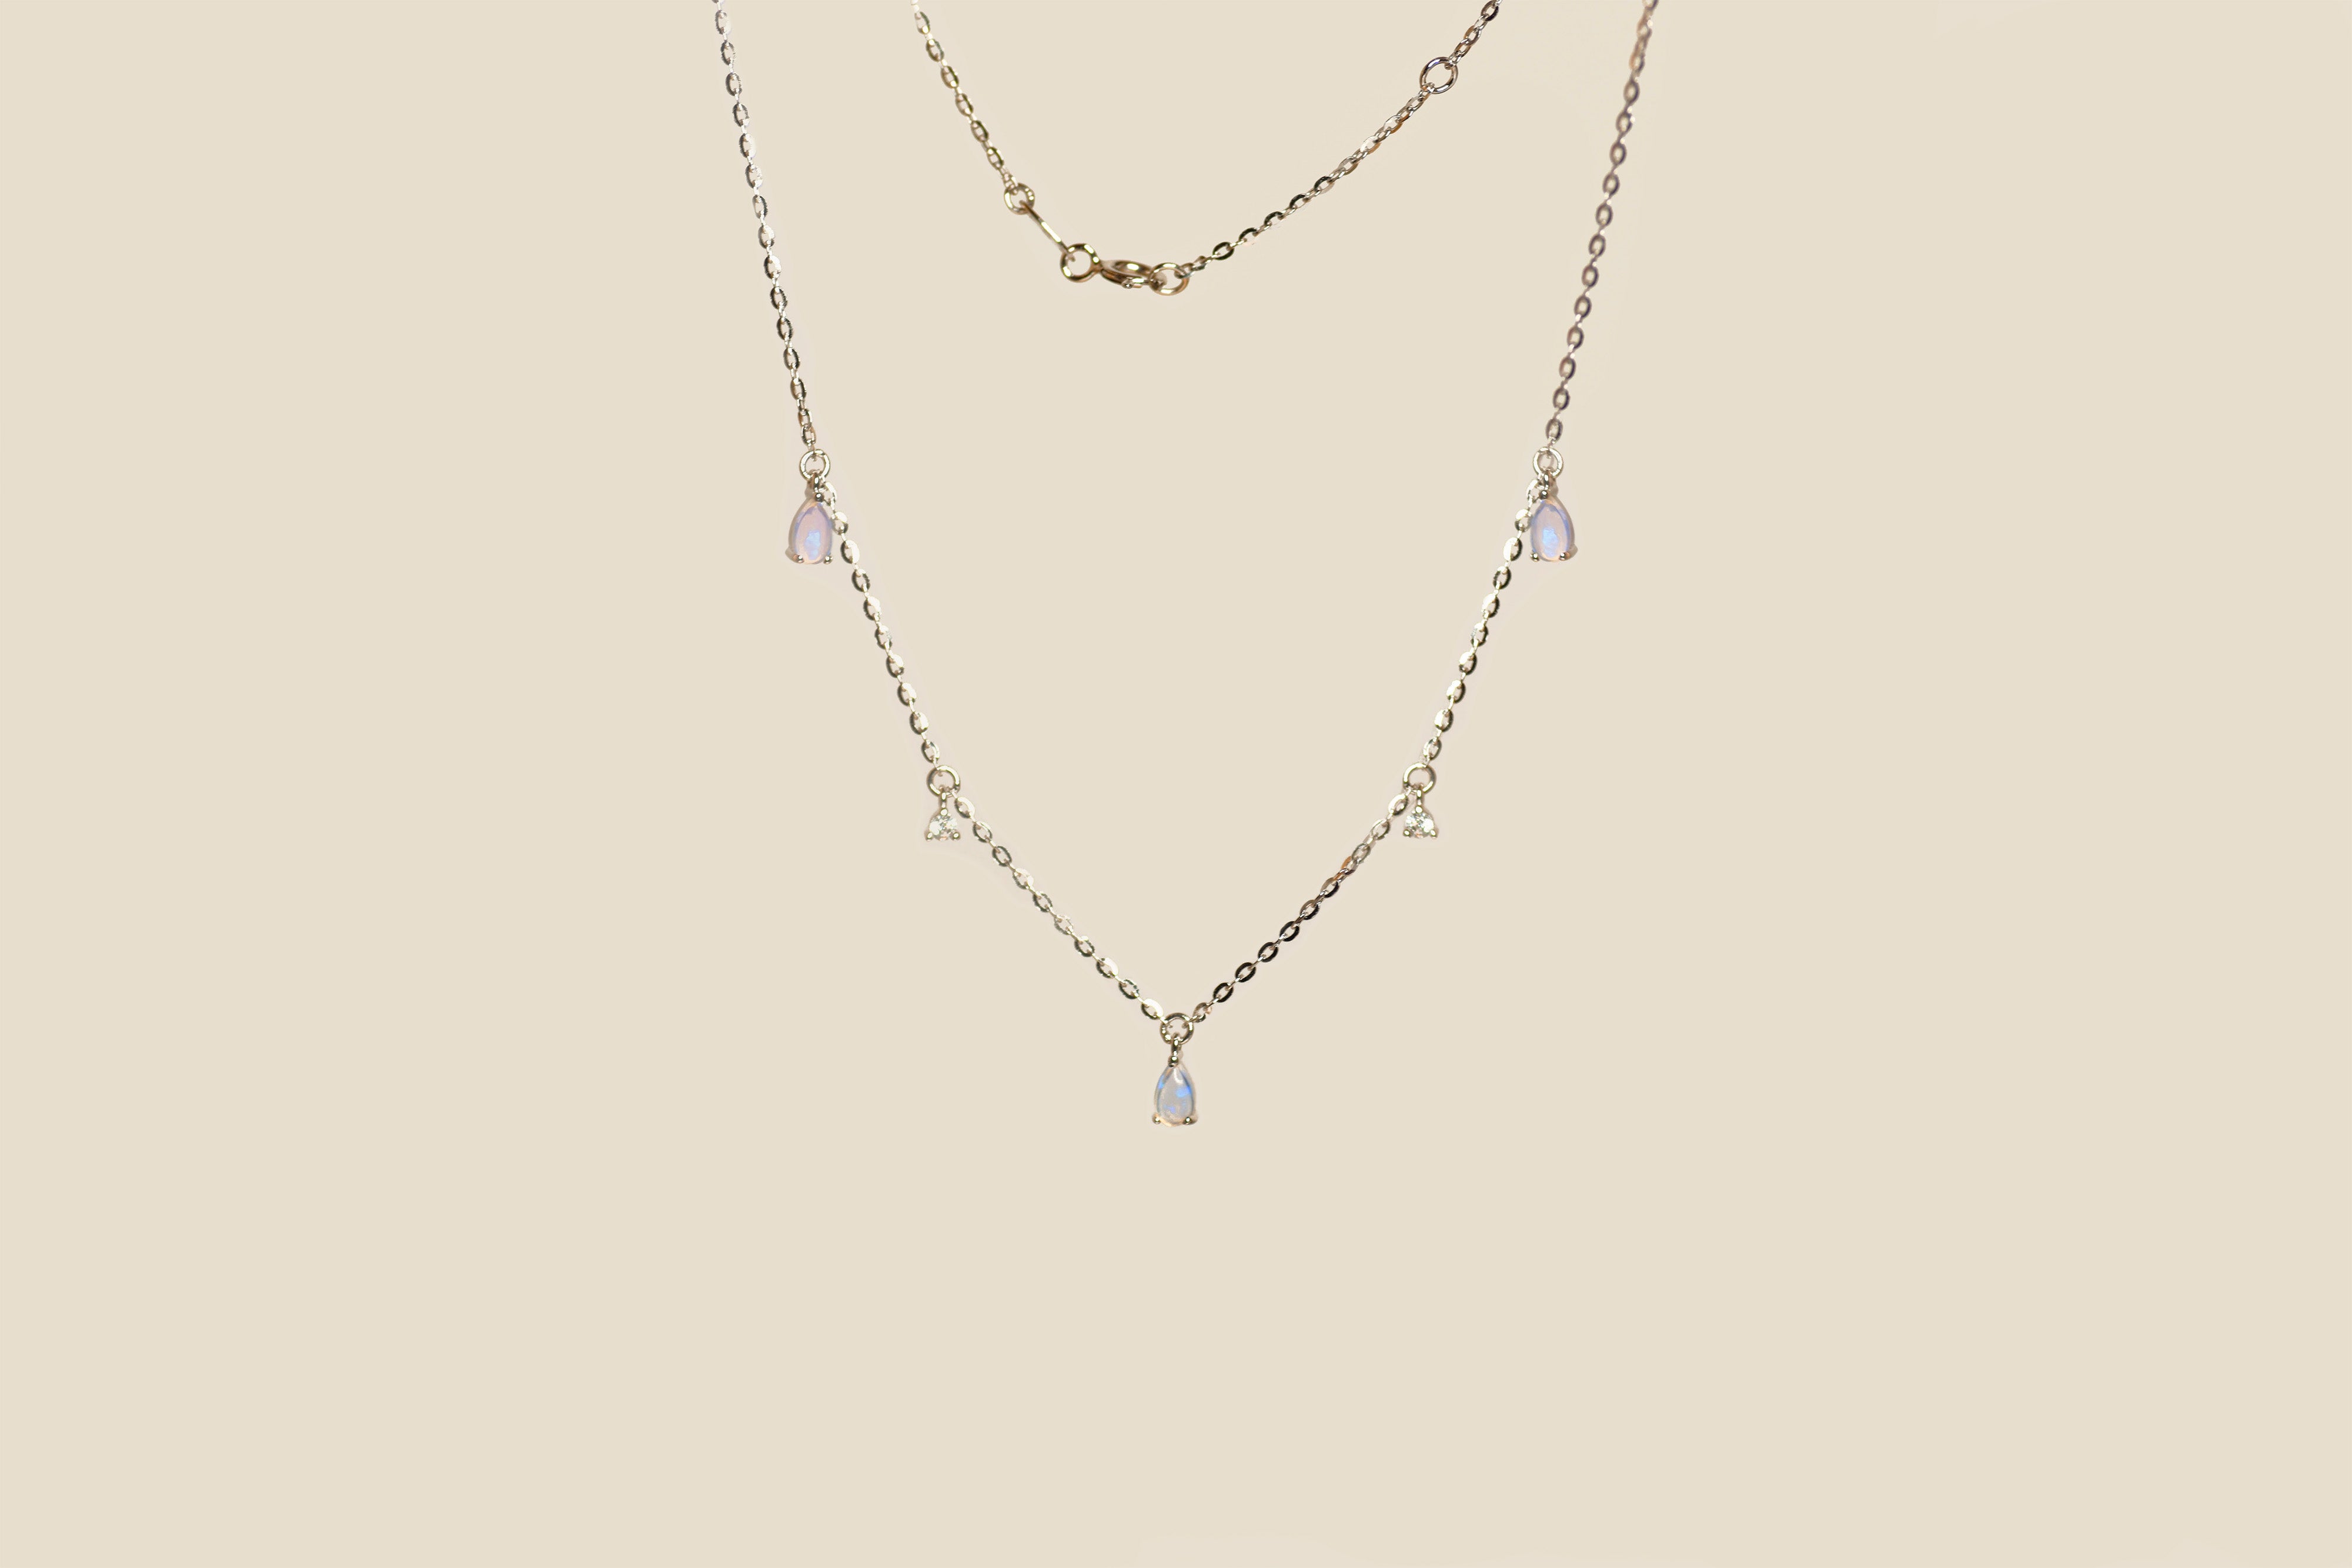 Michelle Yuen Jewelry's Drizzle Opal Necklace uses Australian violet opal / blue opal